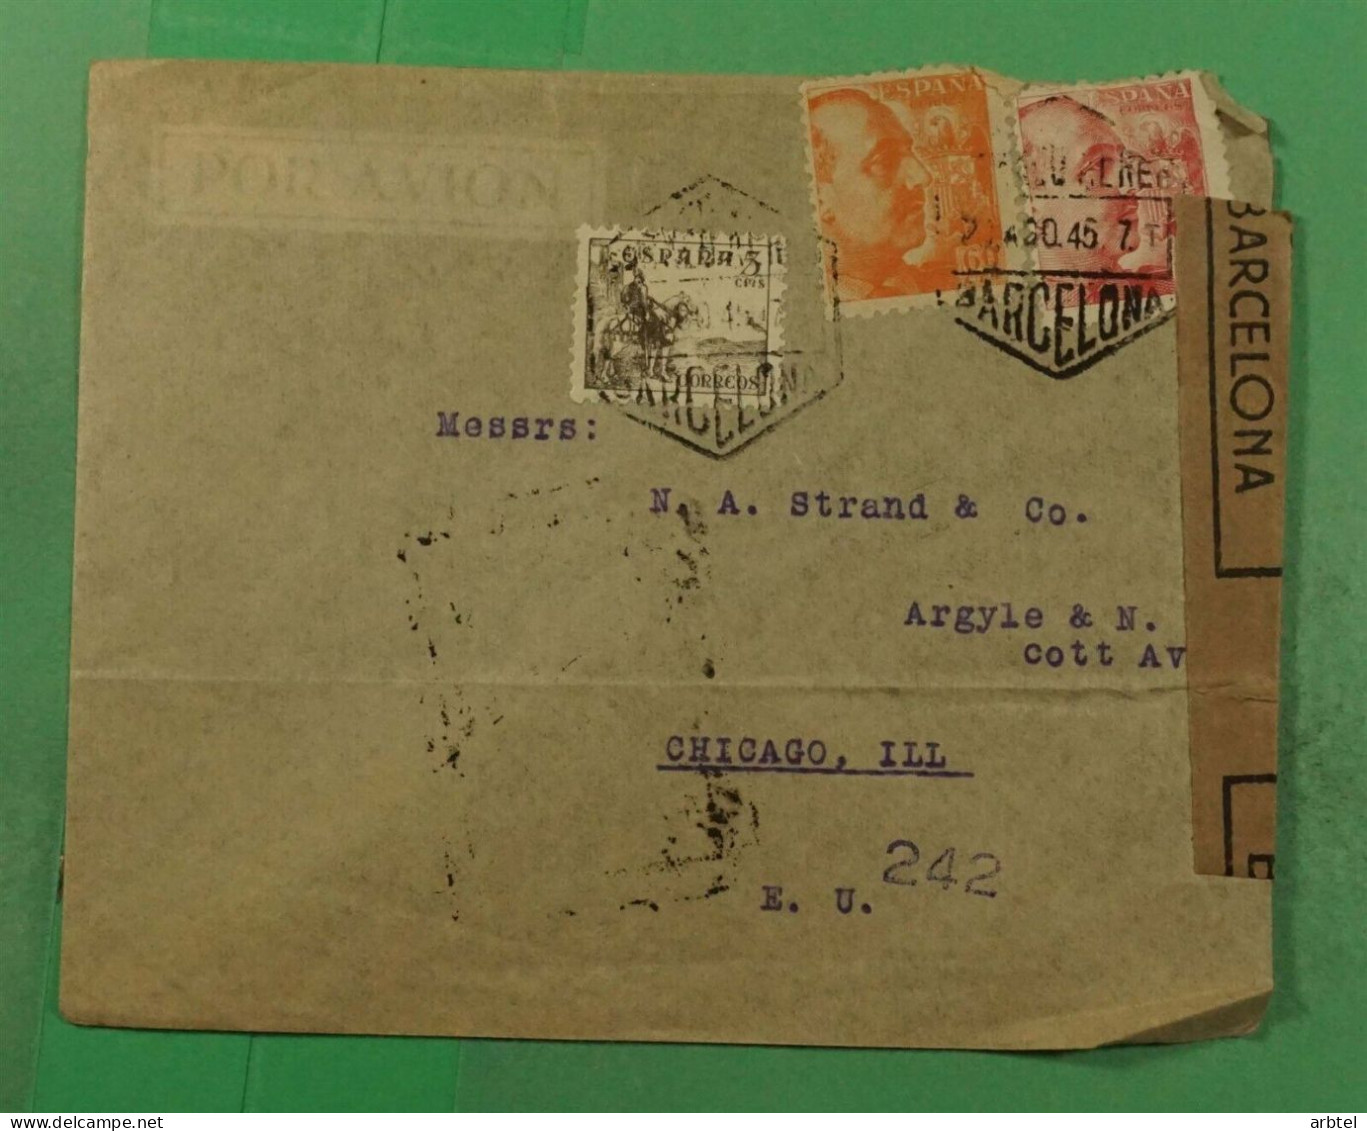 BARCELONA AEREA A USA 1945 CON CENSURA MAT HEXAGONAL - Covers & Documents